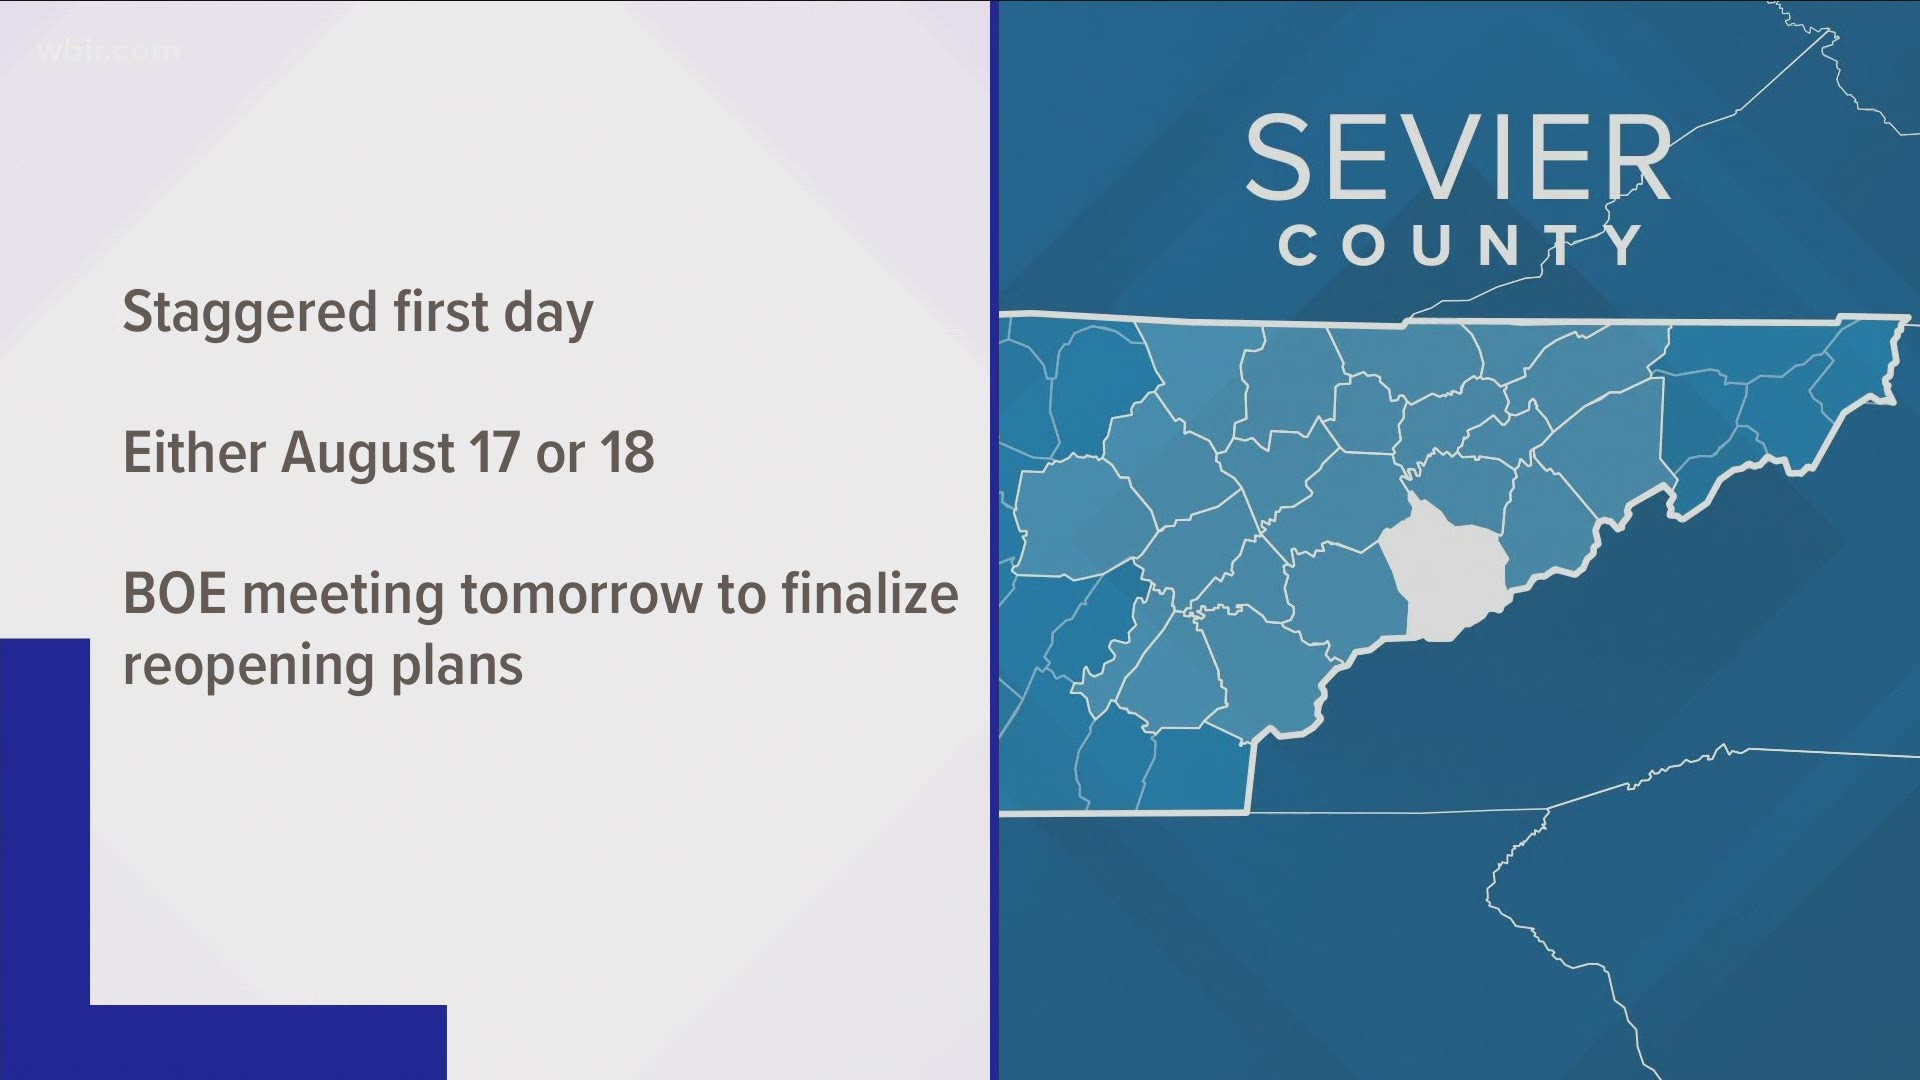 Sevier county schools calendar